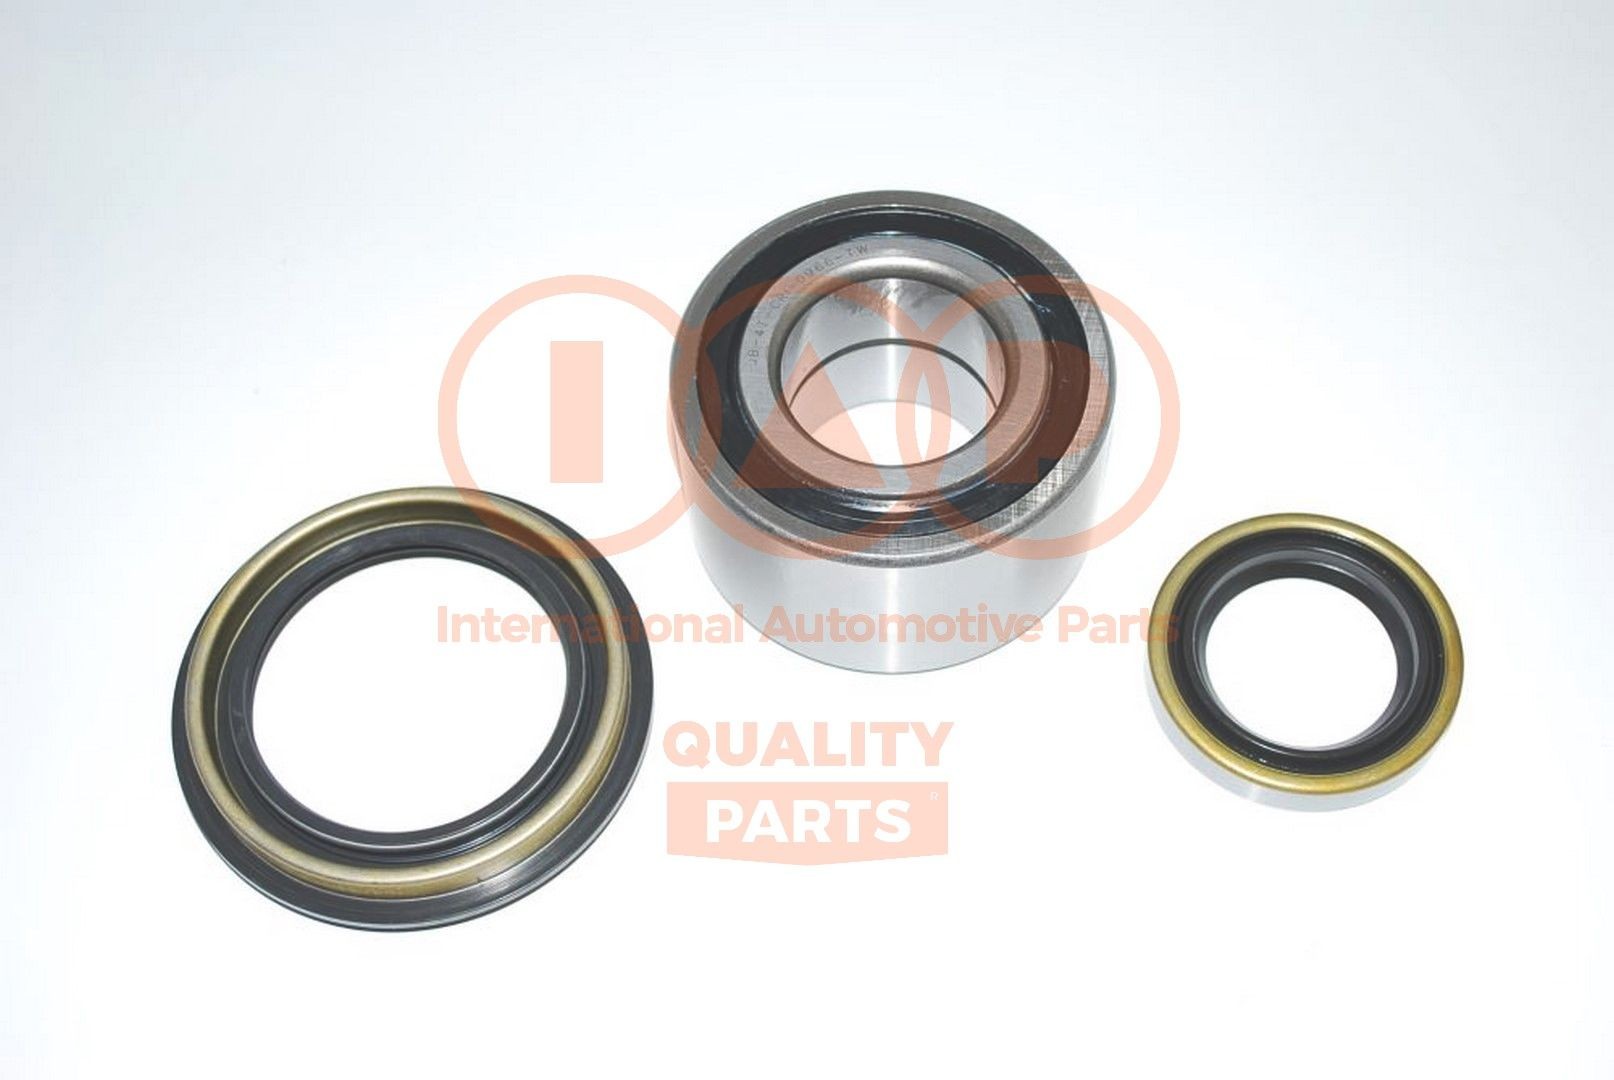 IAP QUALITY PARTS 409-13031K Wheel bearing kit 43252-C6001